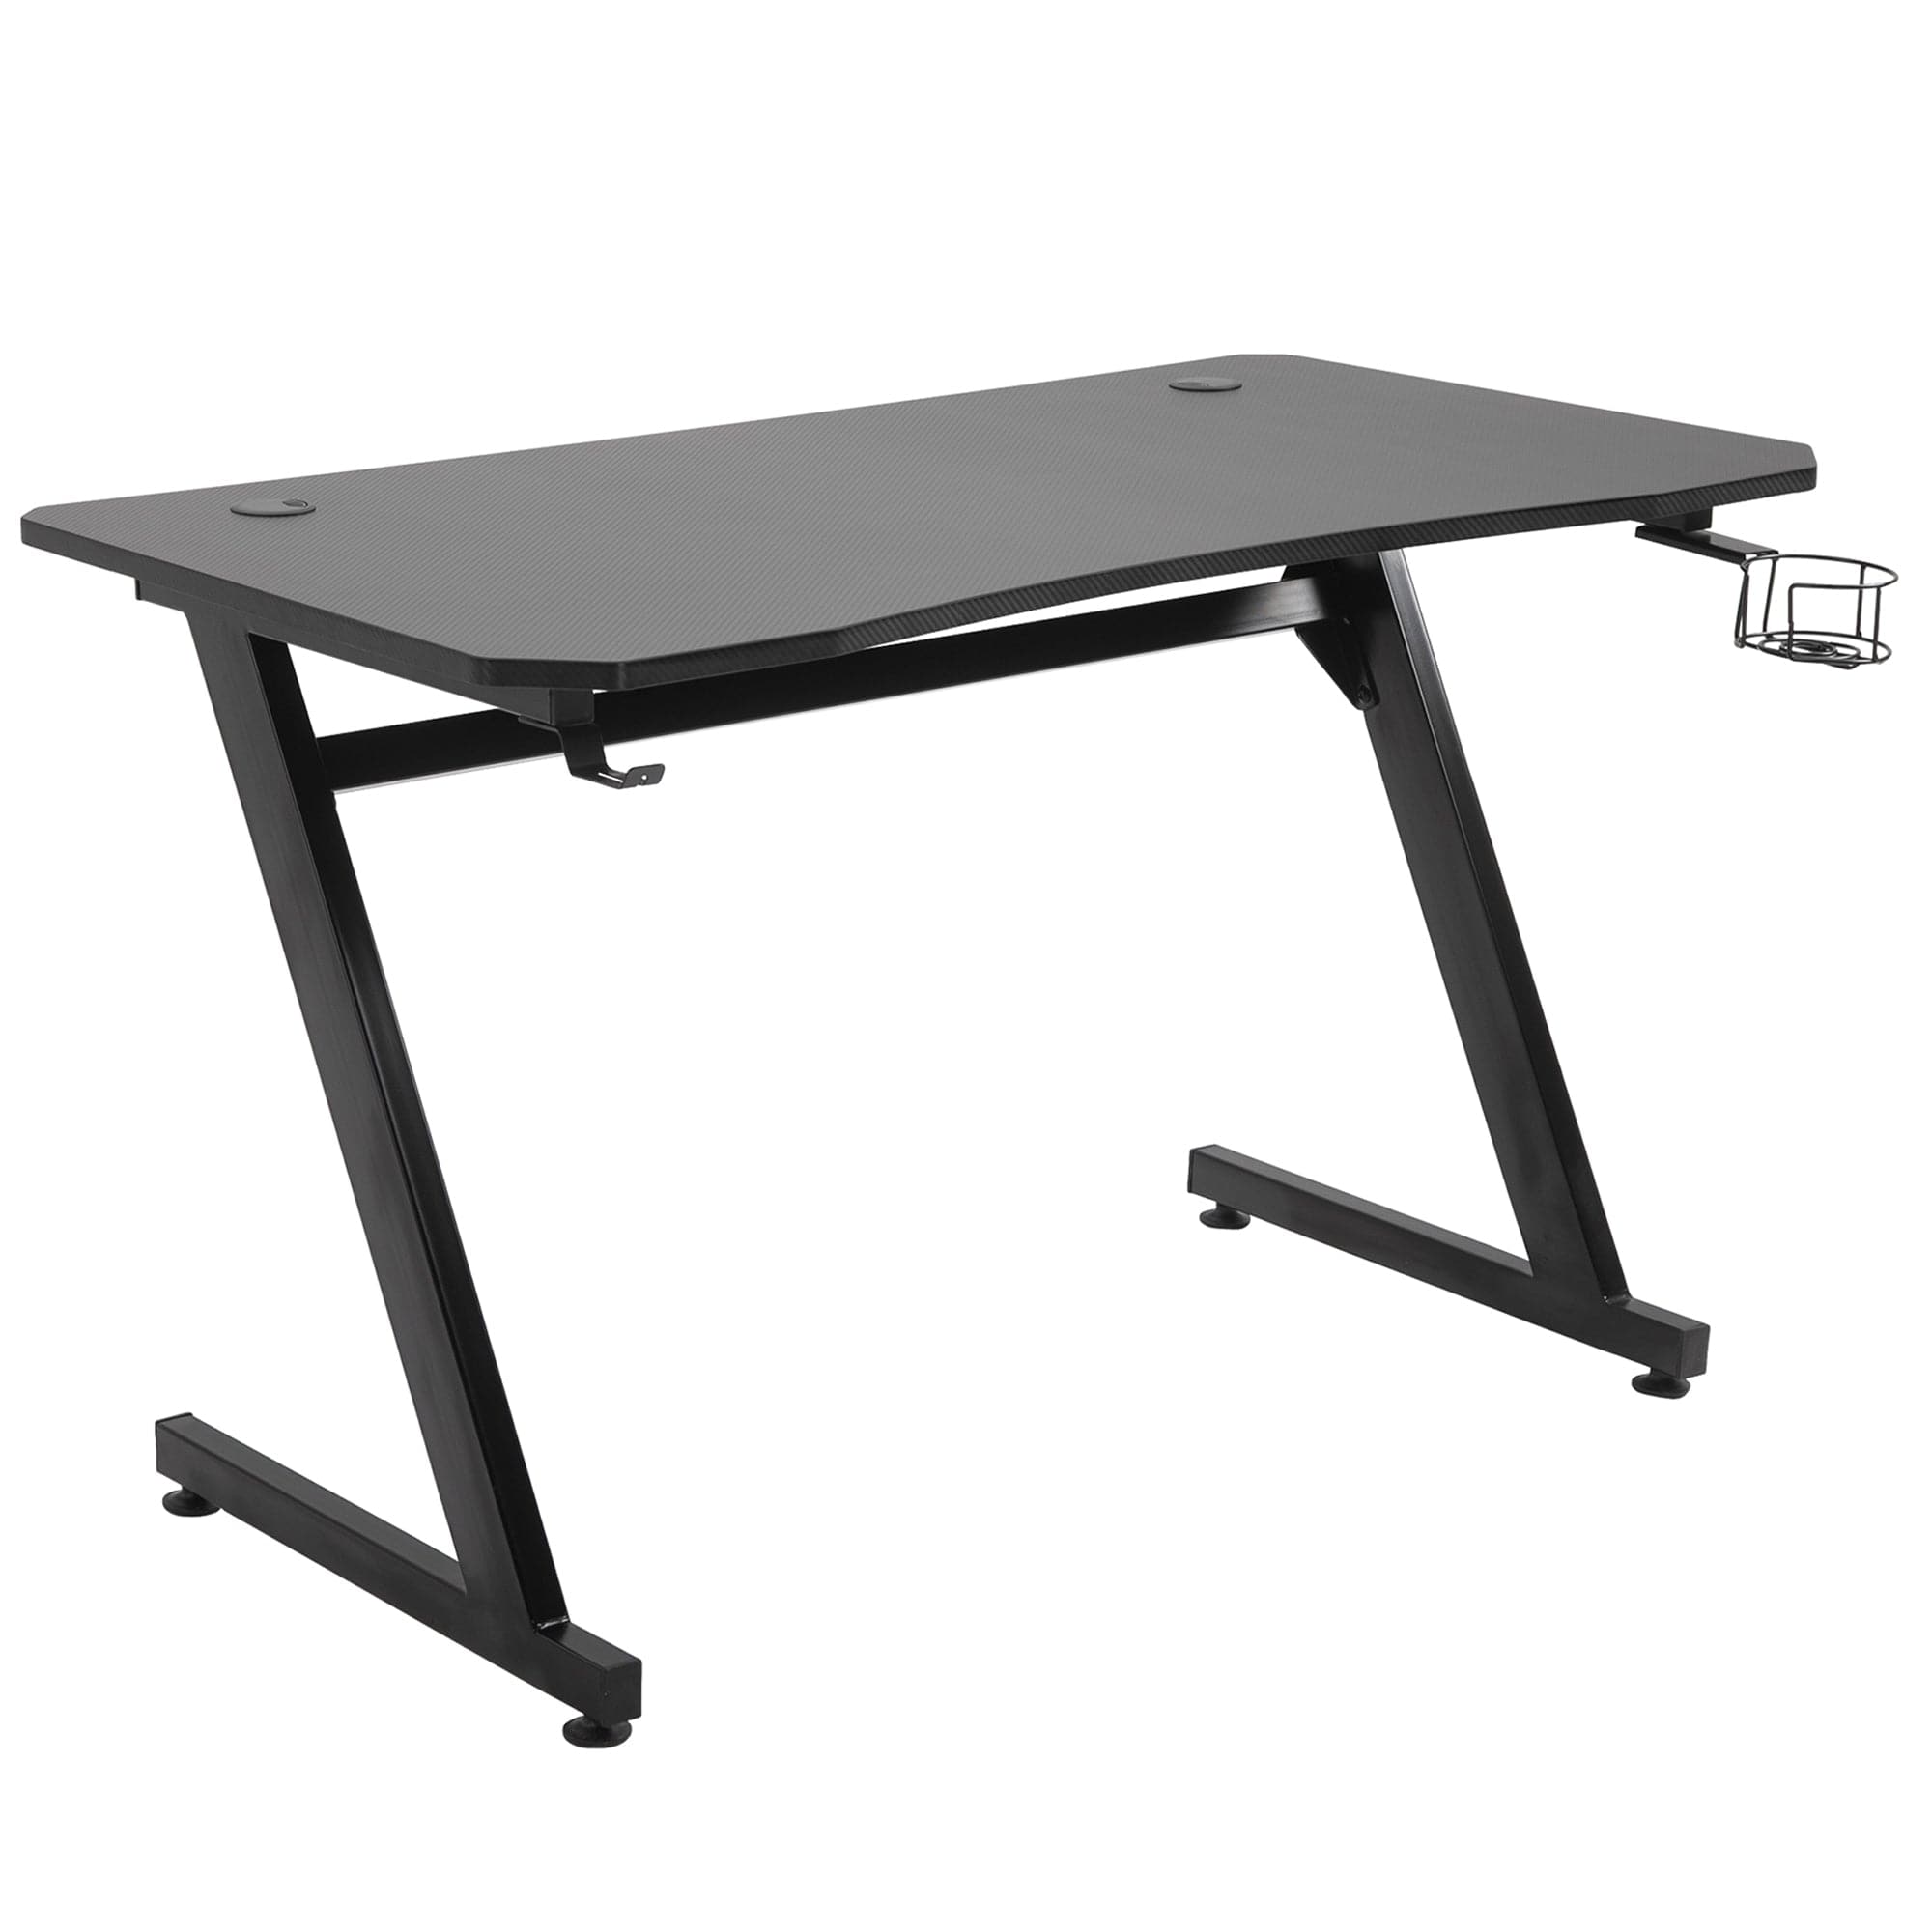 Maplin Plus Steel Frame 74.5 x 120 x 65cm Gaming Desk with Cup / Headphone Holder & Adjustable Feet (Black)